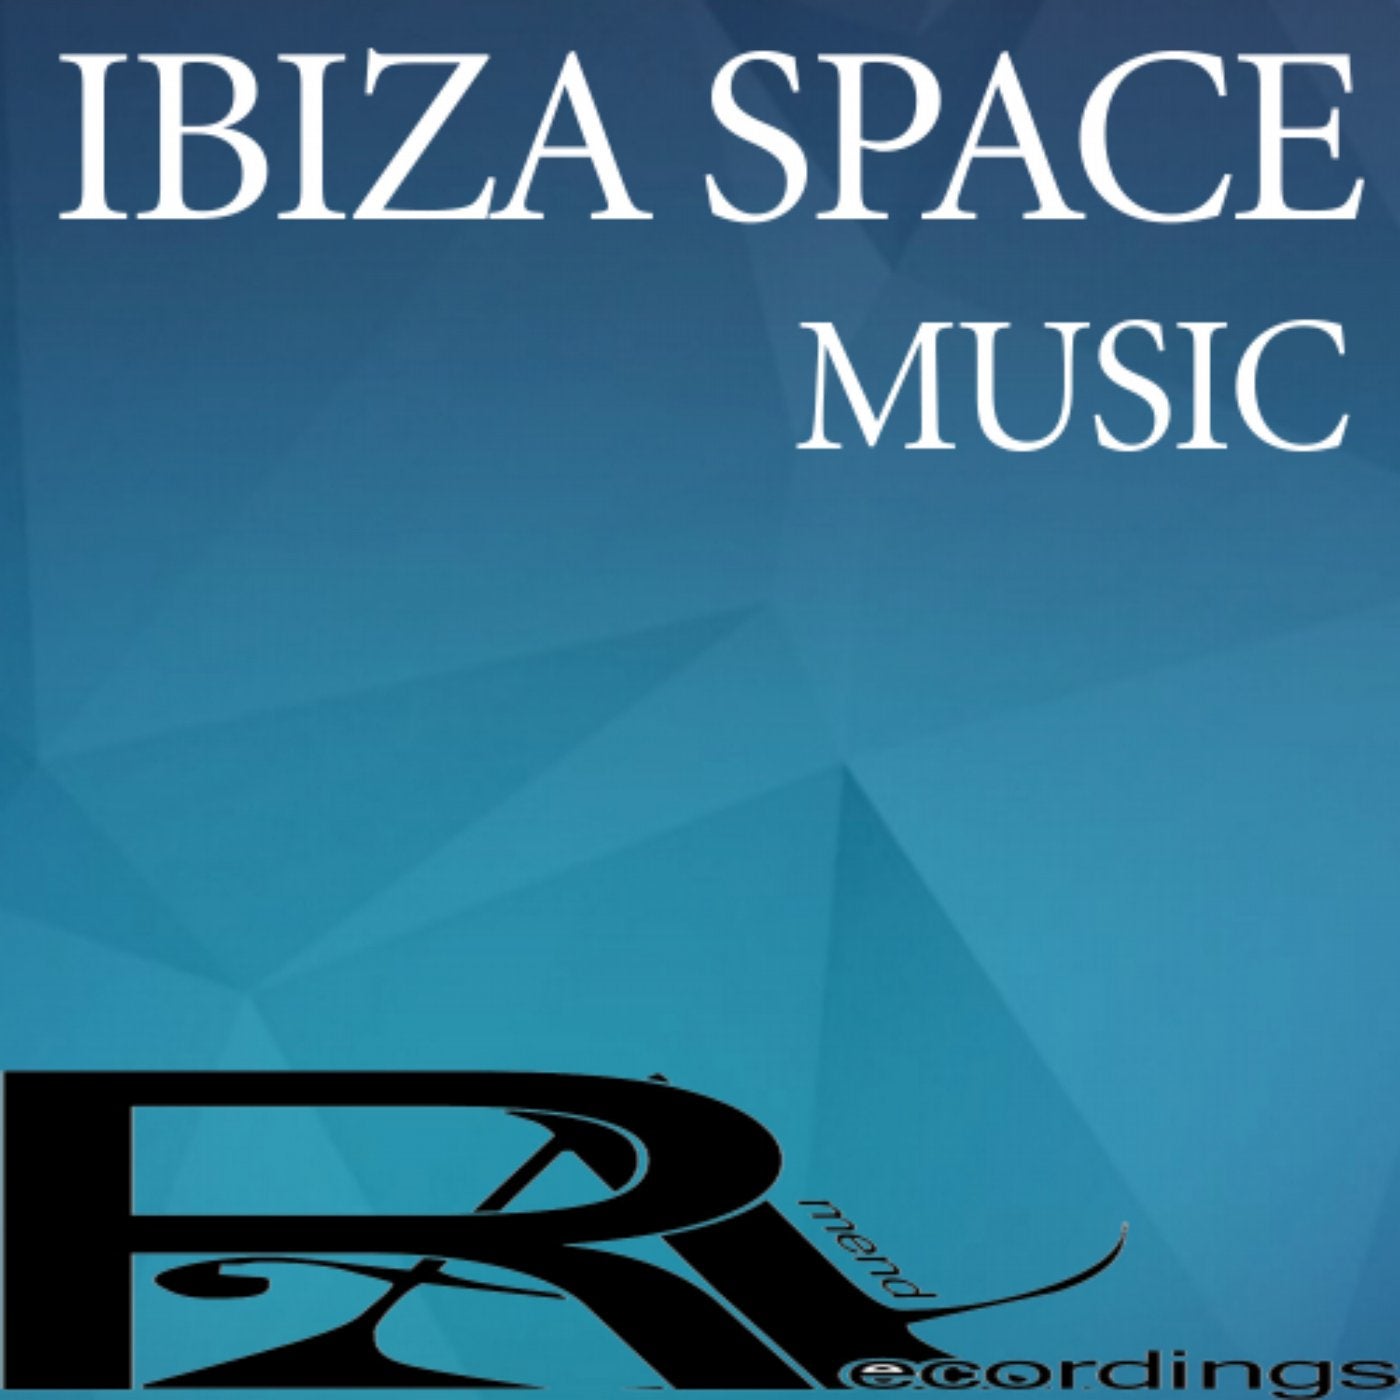 IBIZA SPACE MUSIC